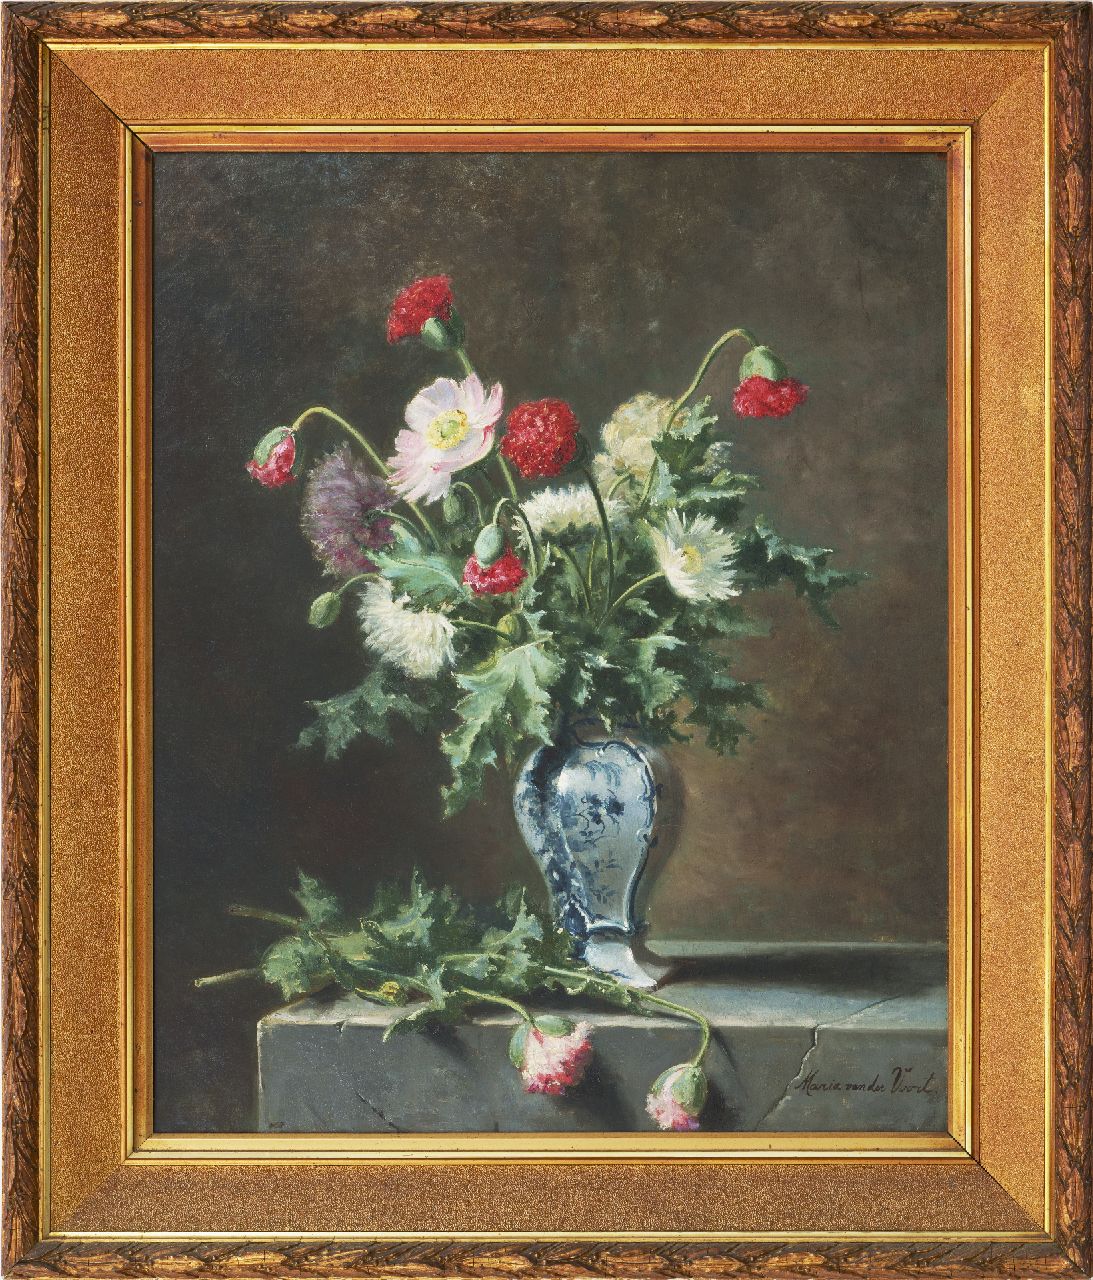 Voort in de Betouw-Nourney M. van der | Maria van der Voort in de Betouw-Nourney | Paintings offered for sale | A still life with poppies, oil on canvas 79.2 x 64.7 cm, signed l.r.